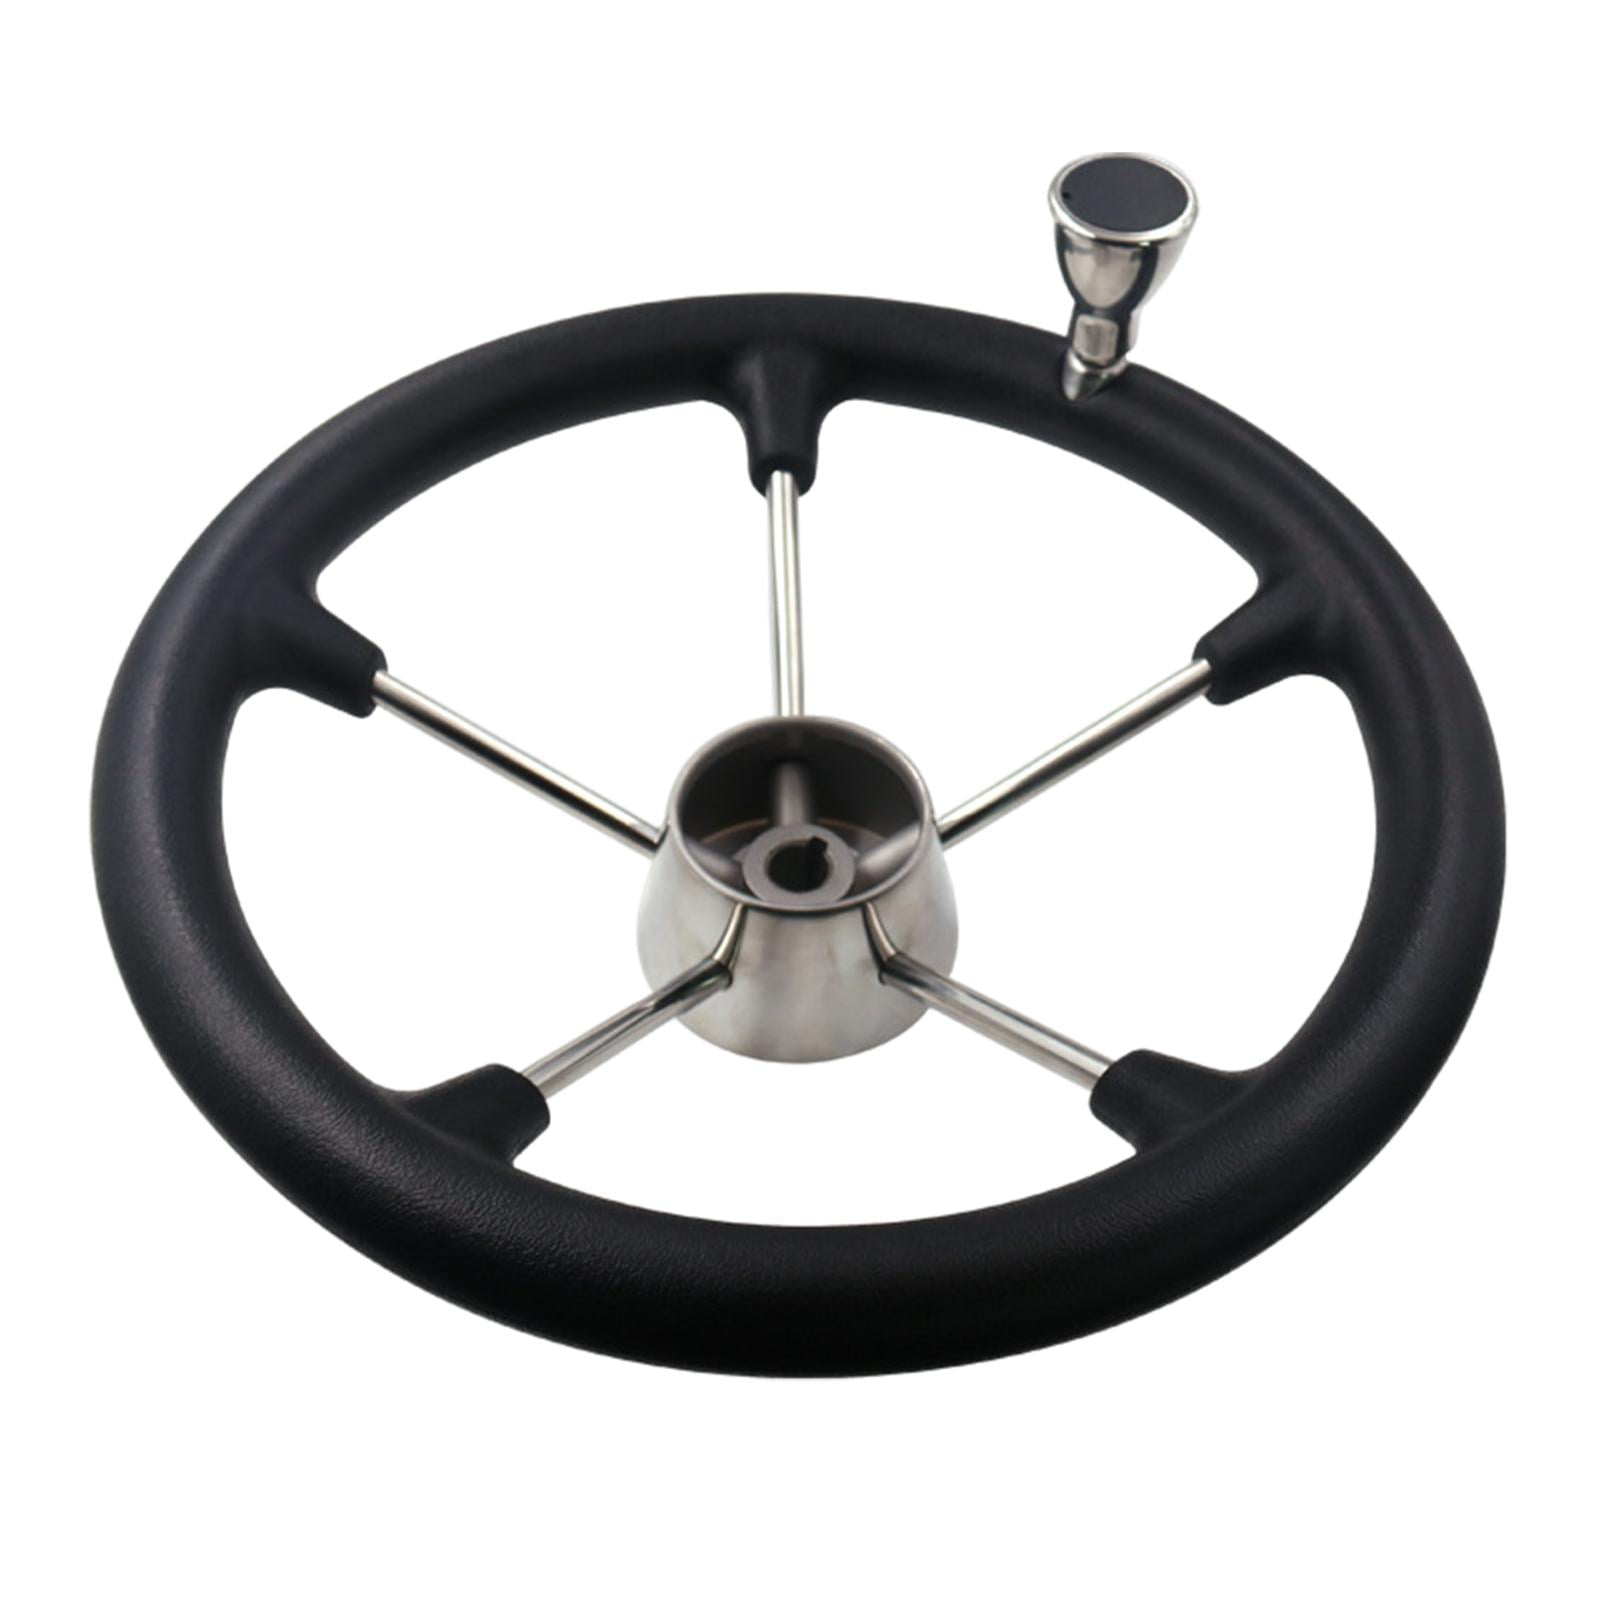 Yaegarden 5 Spoke Boat Steering Wheel Stainless Marine Wheel with Black Foam 